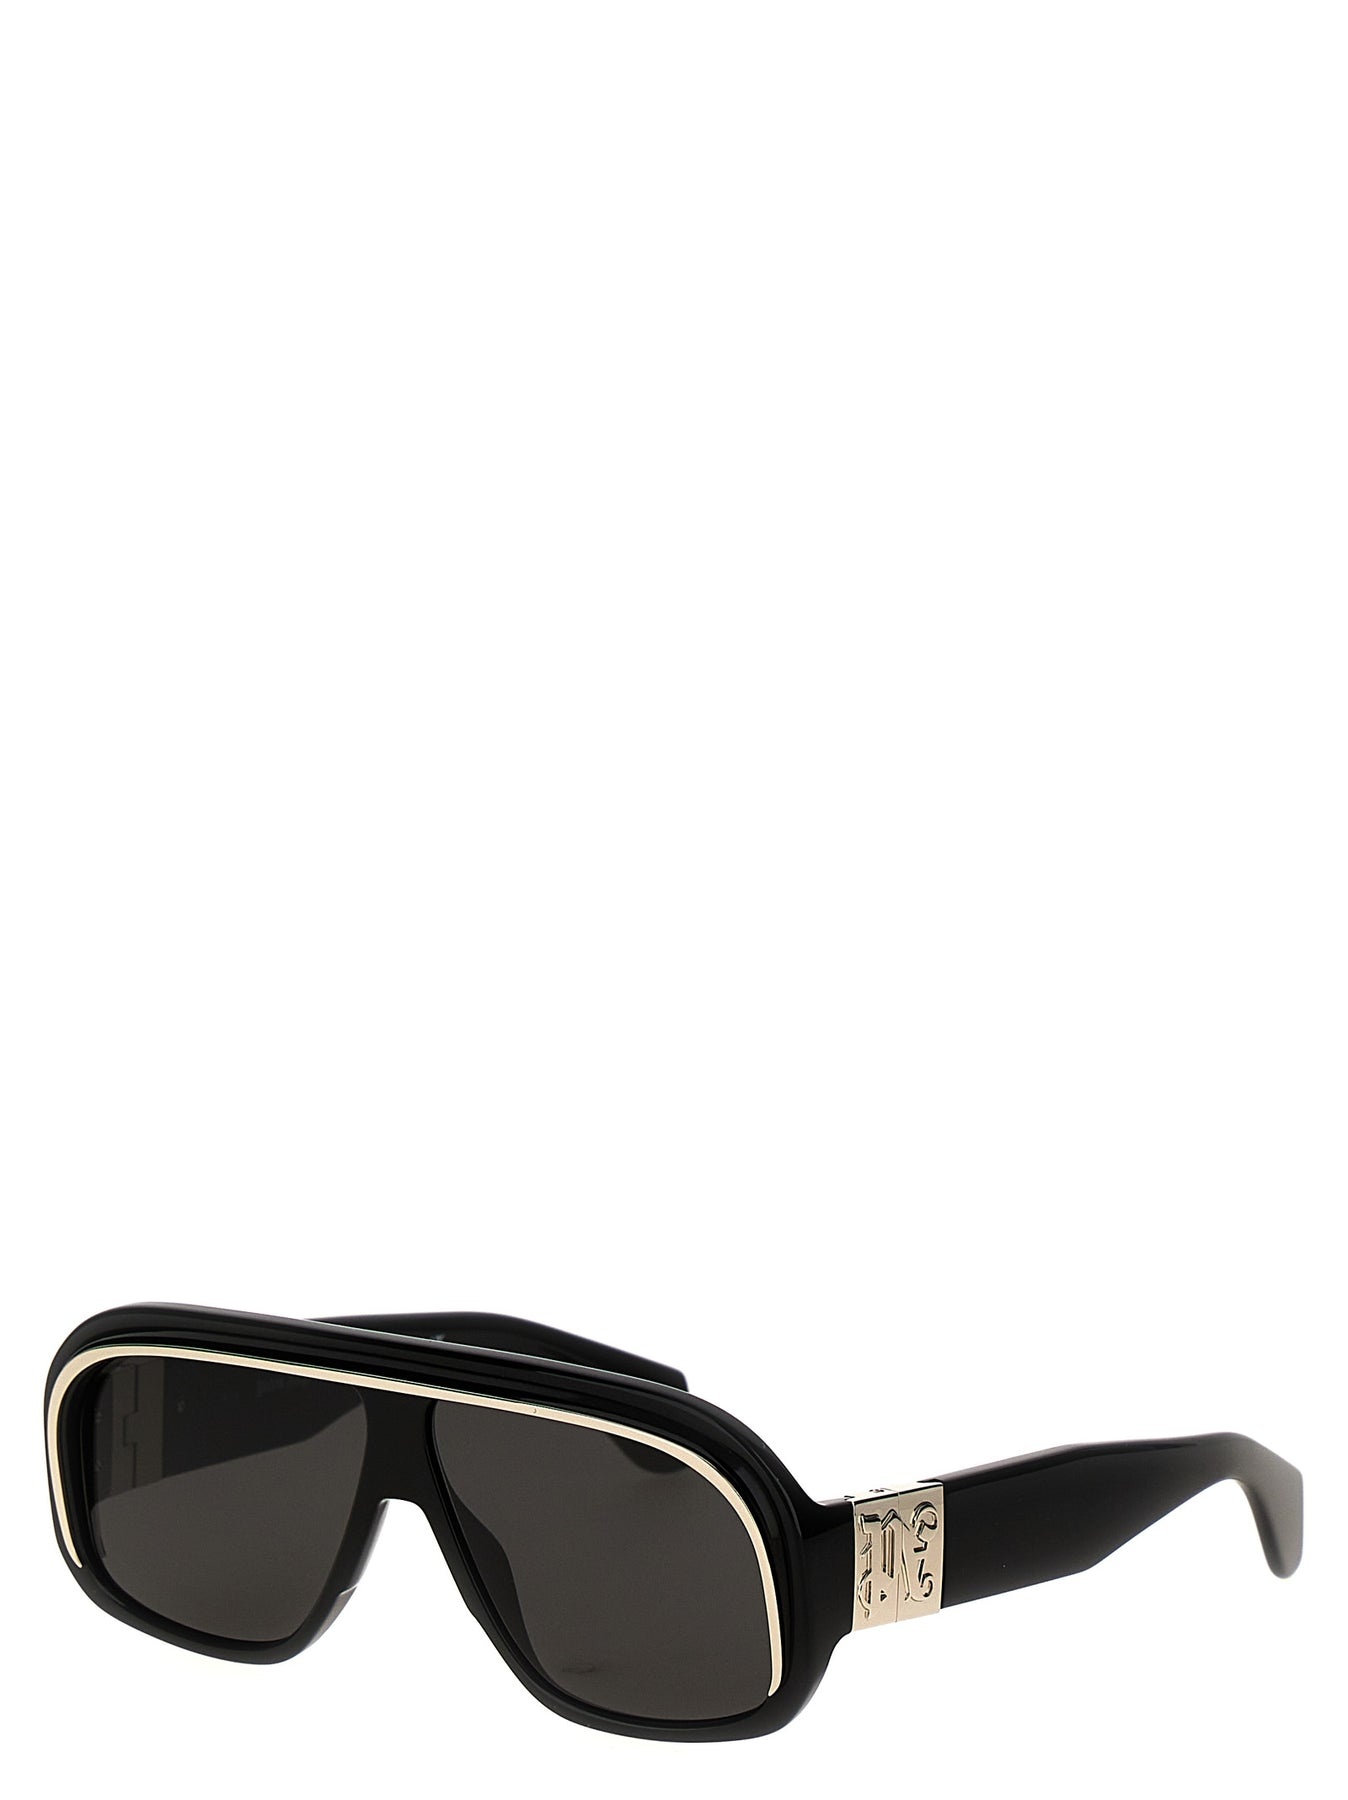 Reedley Sunglasses Black - 3